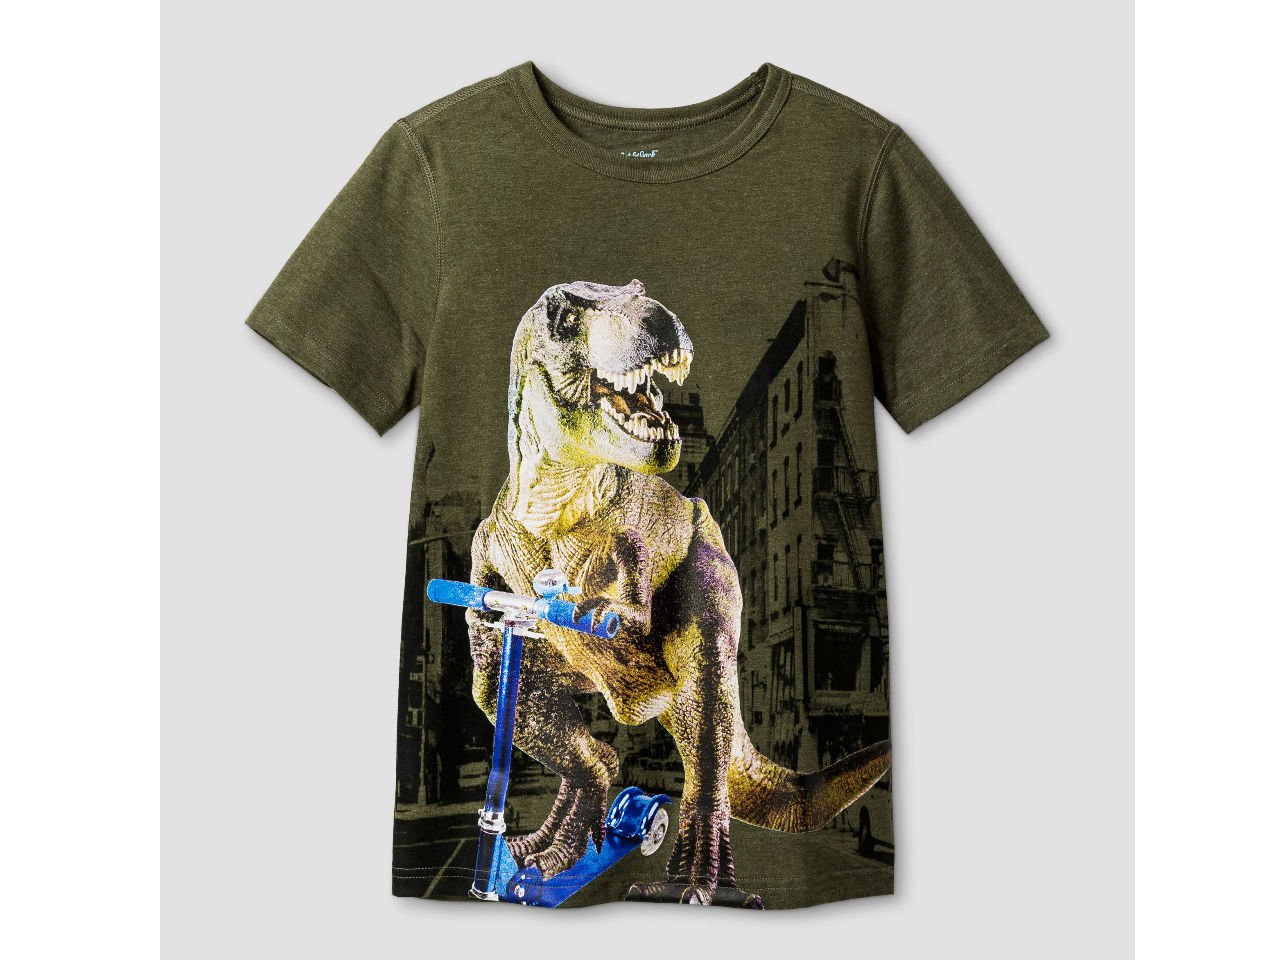 target sensory-friendly t-shirt with dinosaur